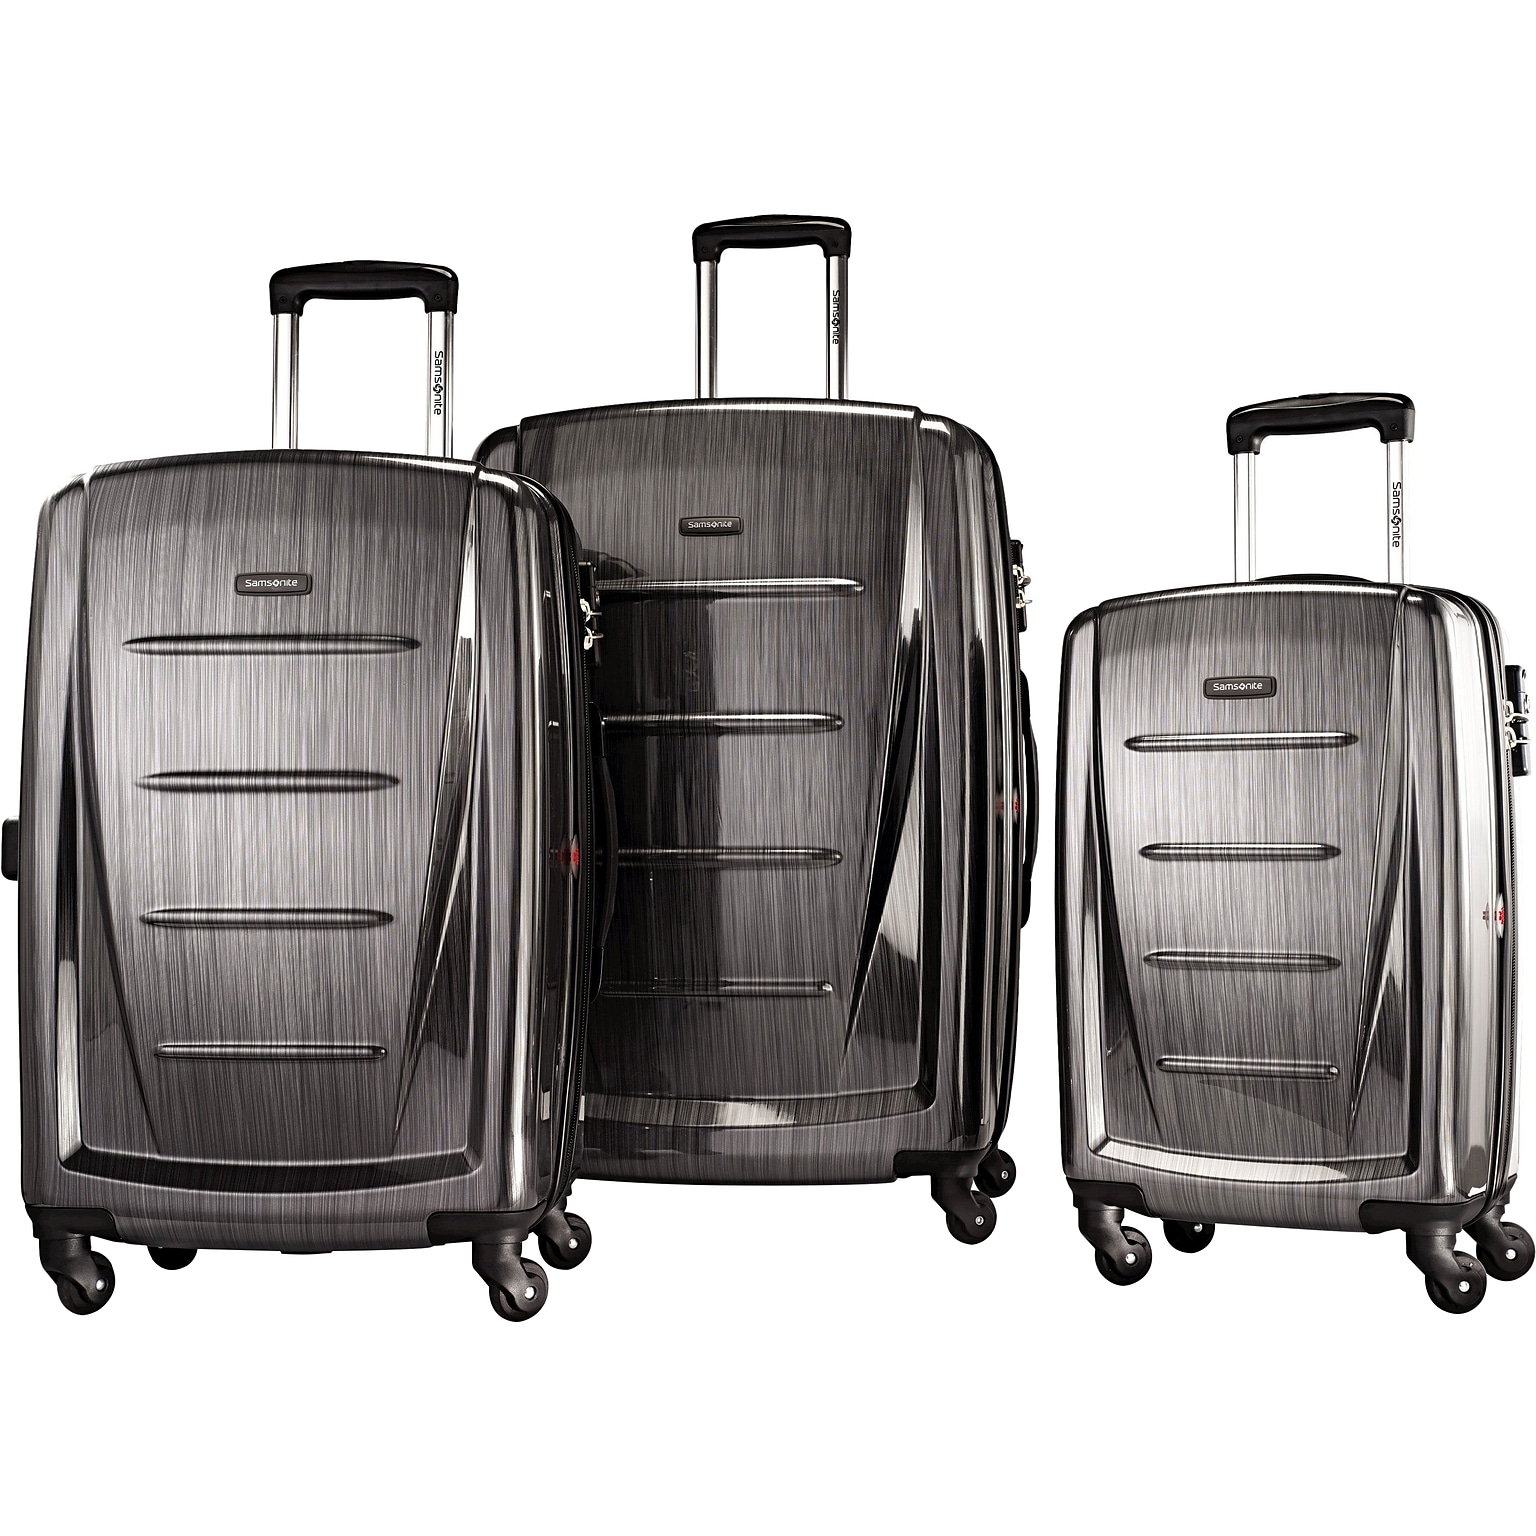 Samsonite Winfield 2 Fashion Polycarbonate 3-Piece Luggage Set, Charcoal (56847-1174)